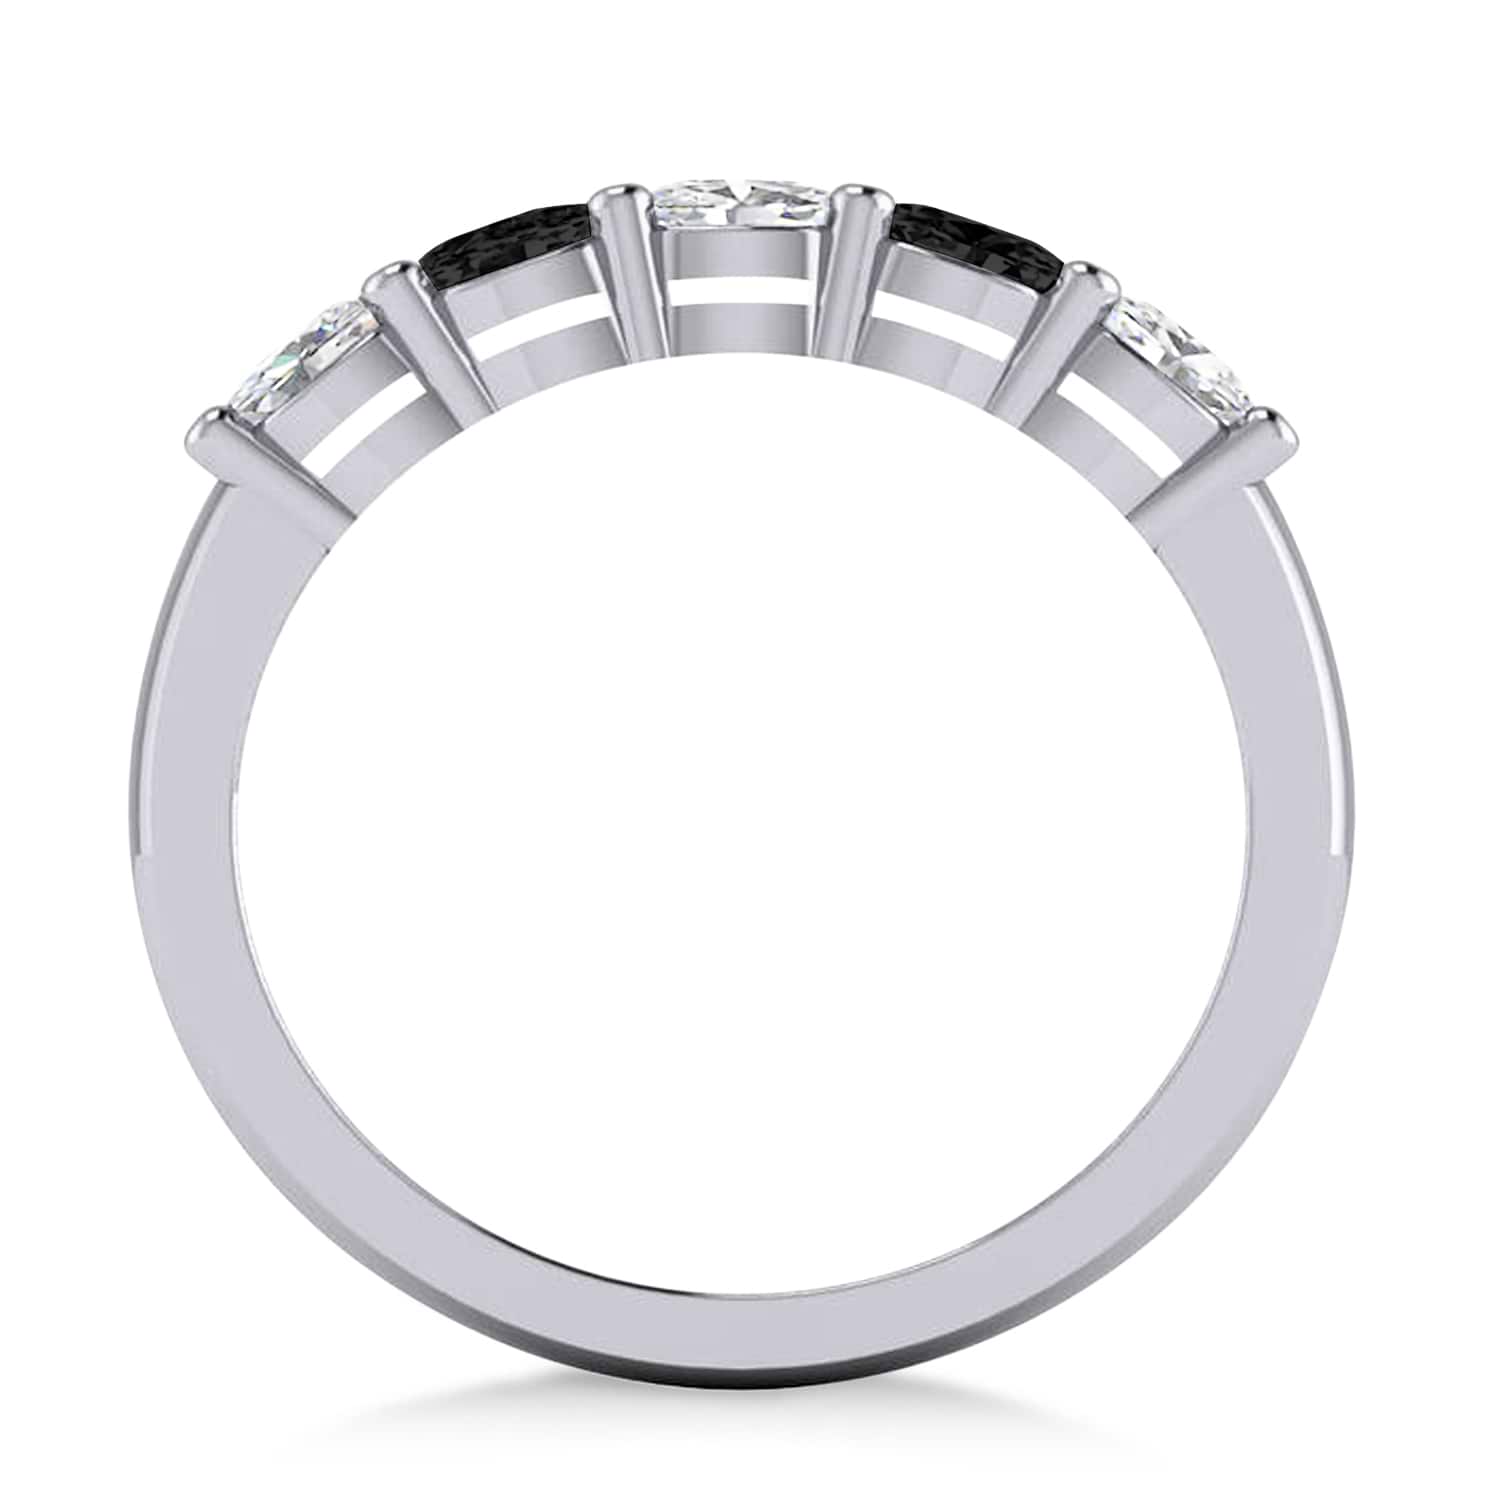 Oval Black & White Diamond Five Stone Ring 14k White Gold (1.00ct)